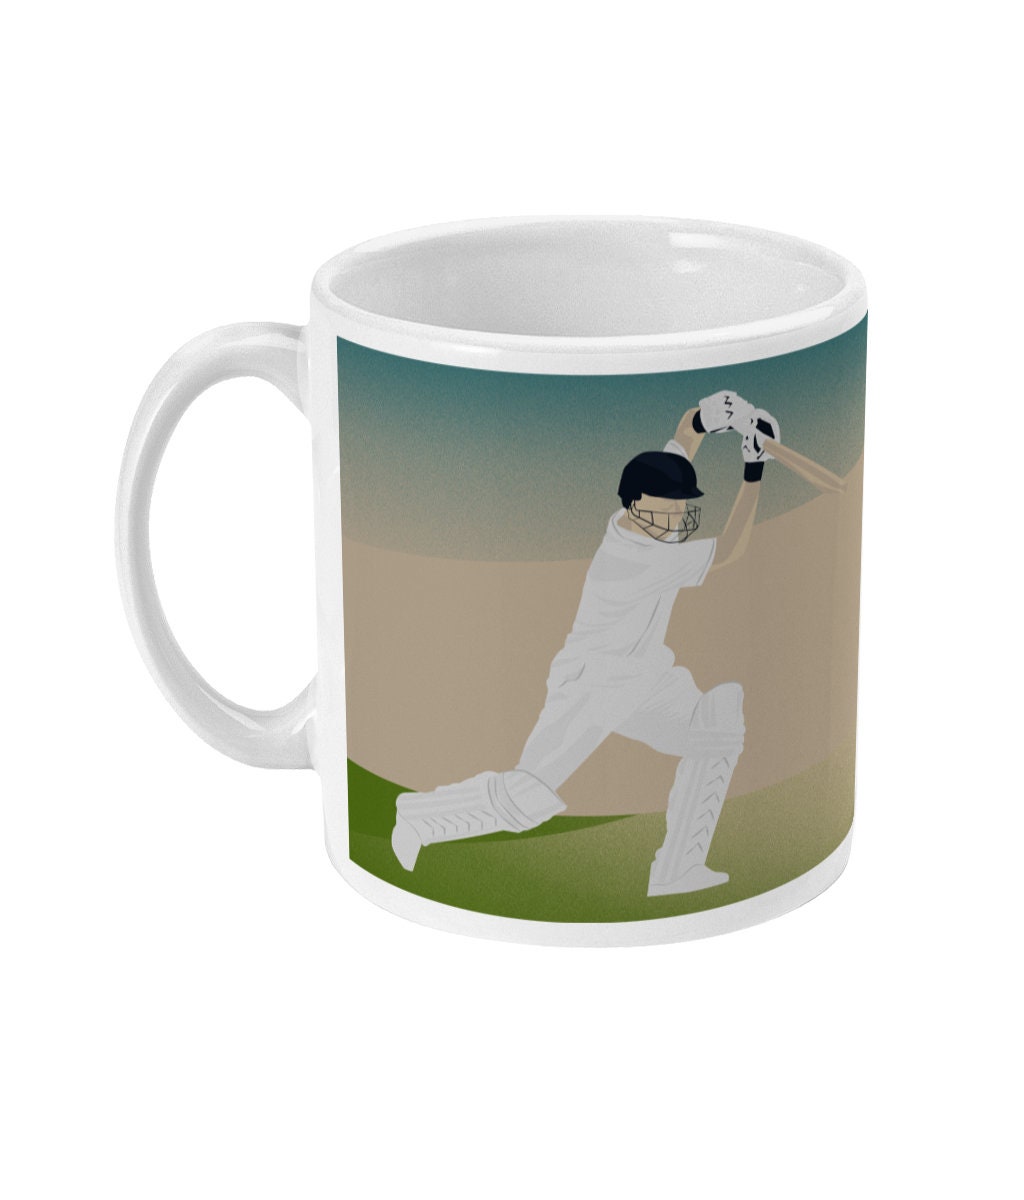 Tasse ou mug Cricket "Cover Drive" - Personnalisable